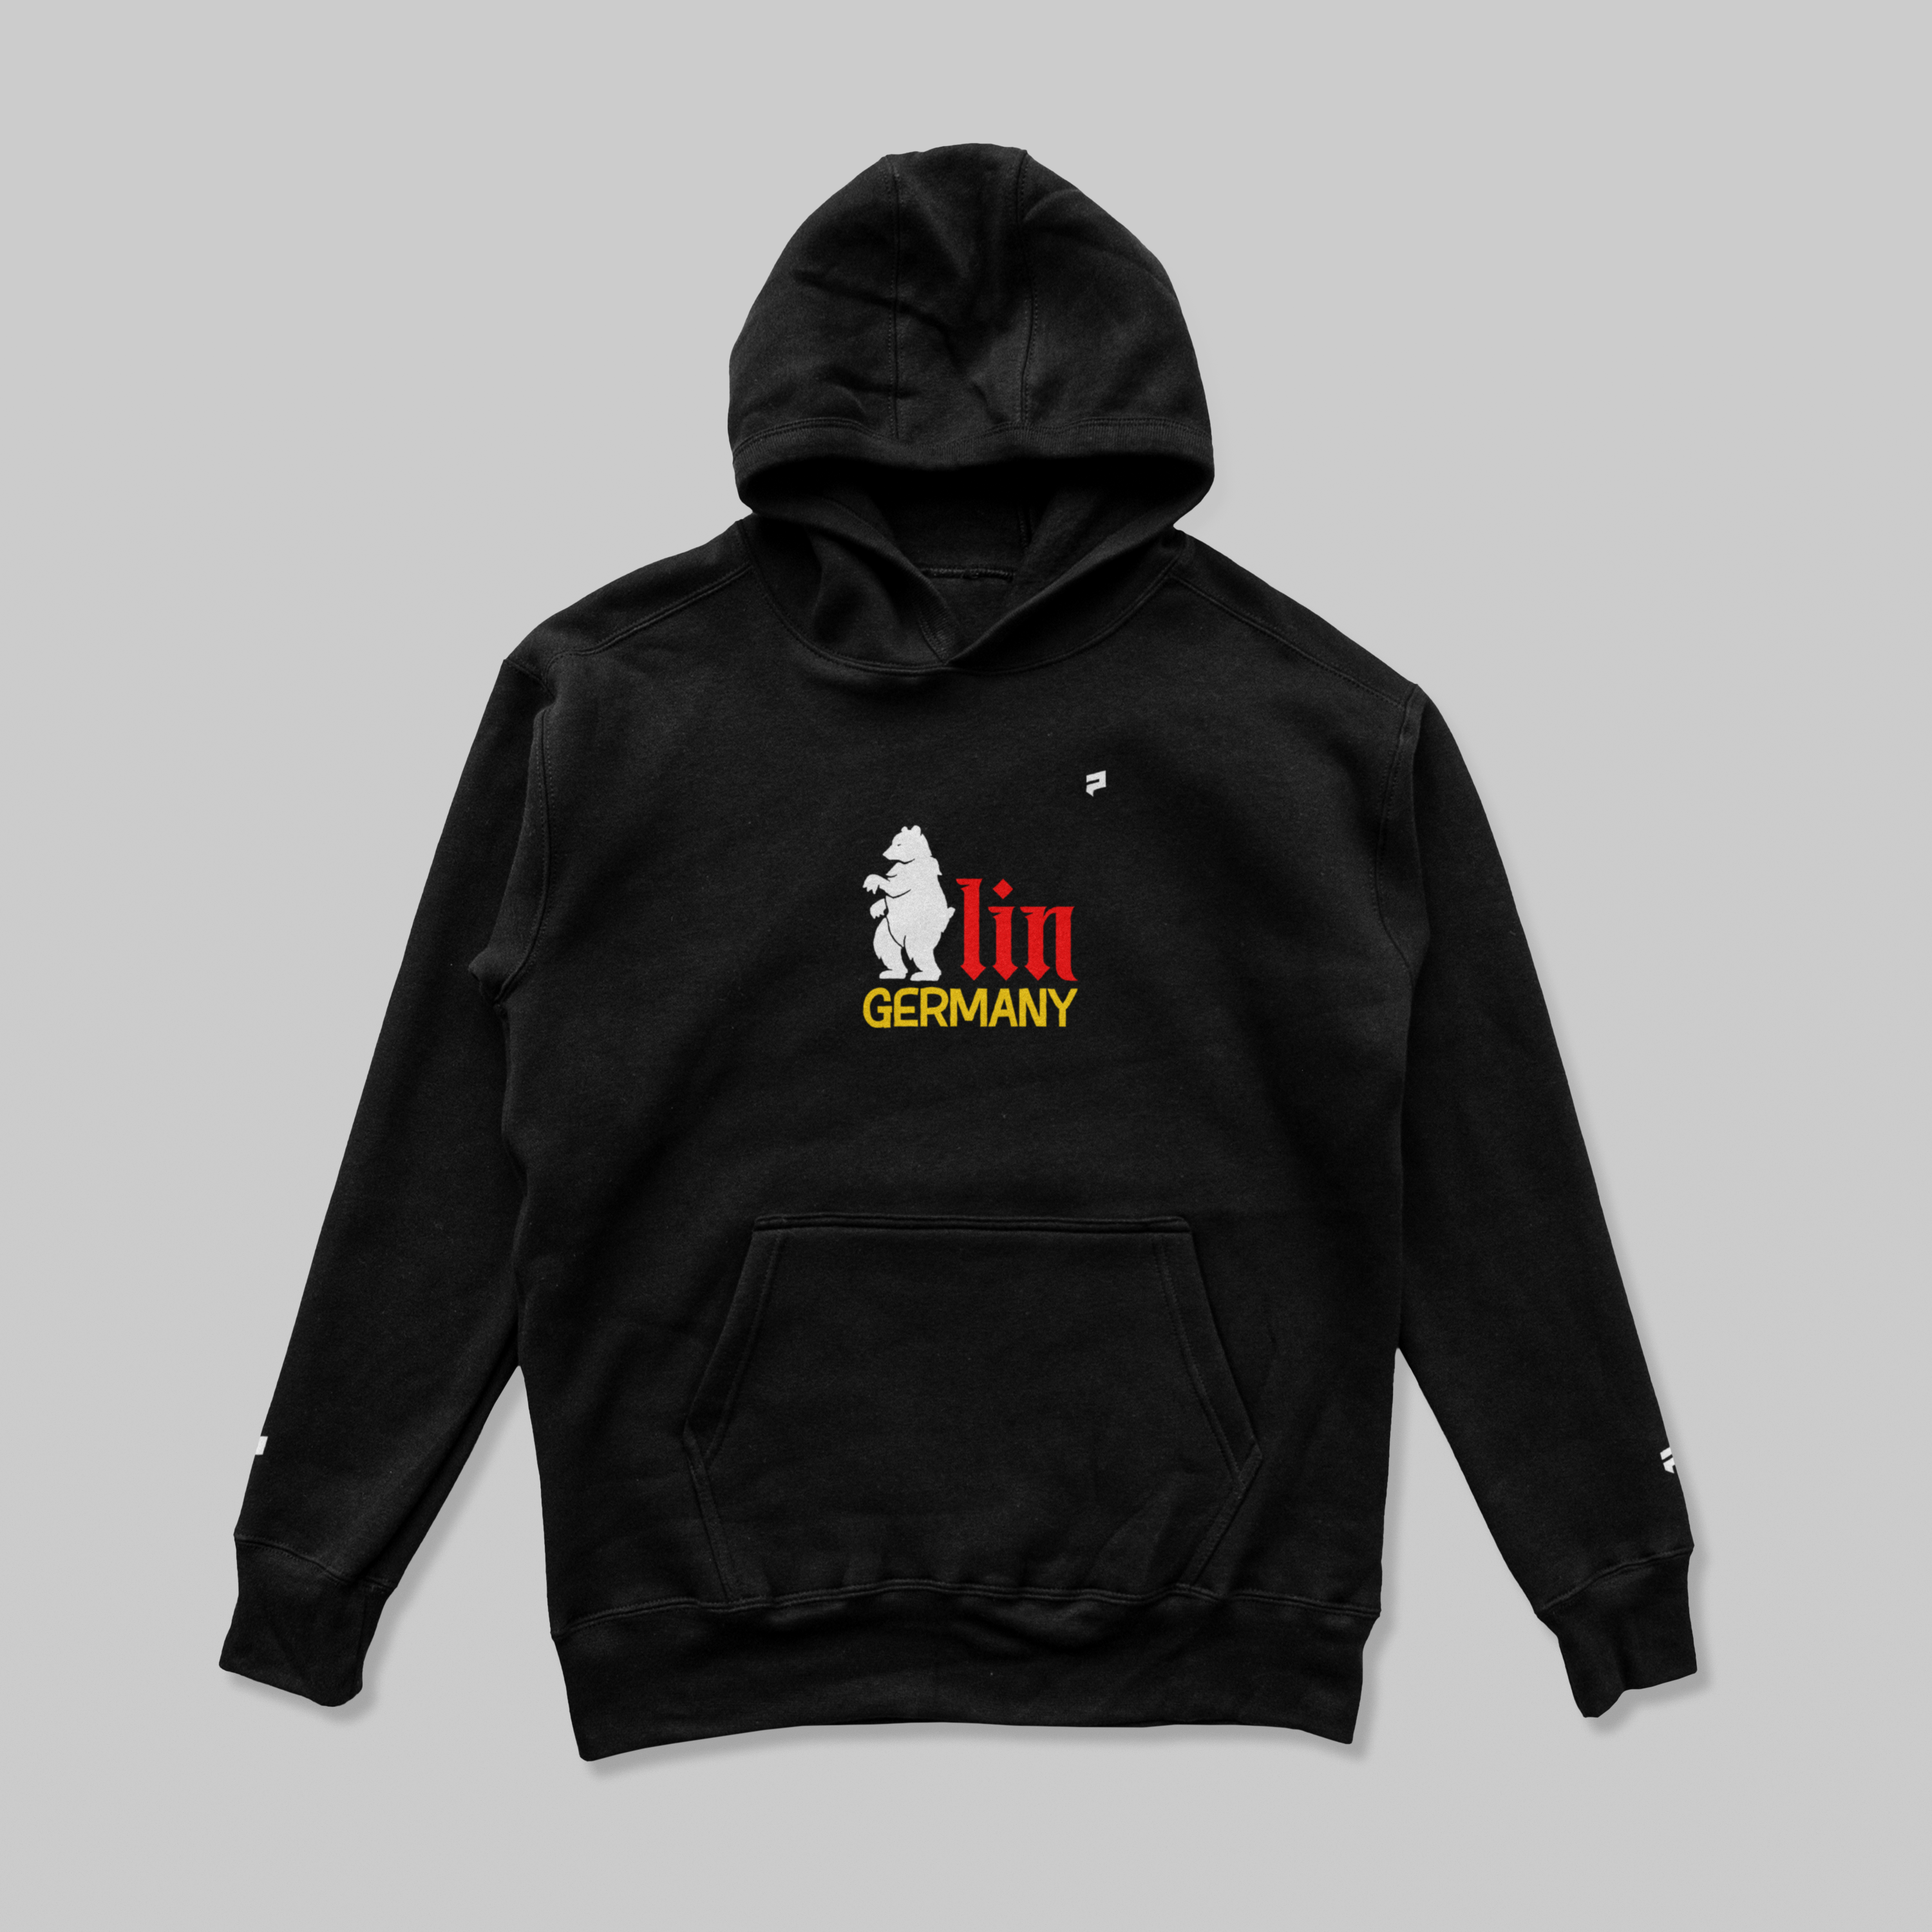 Bearlin embroidery hoodie